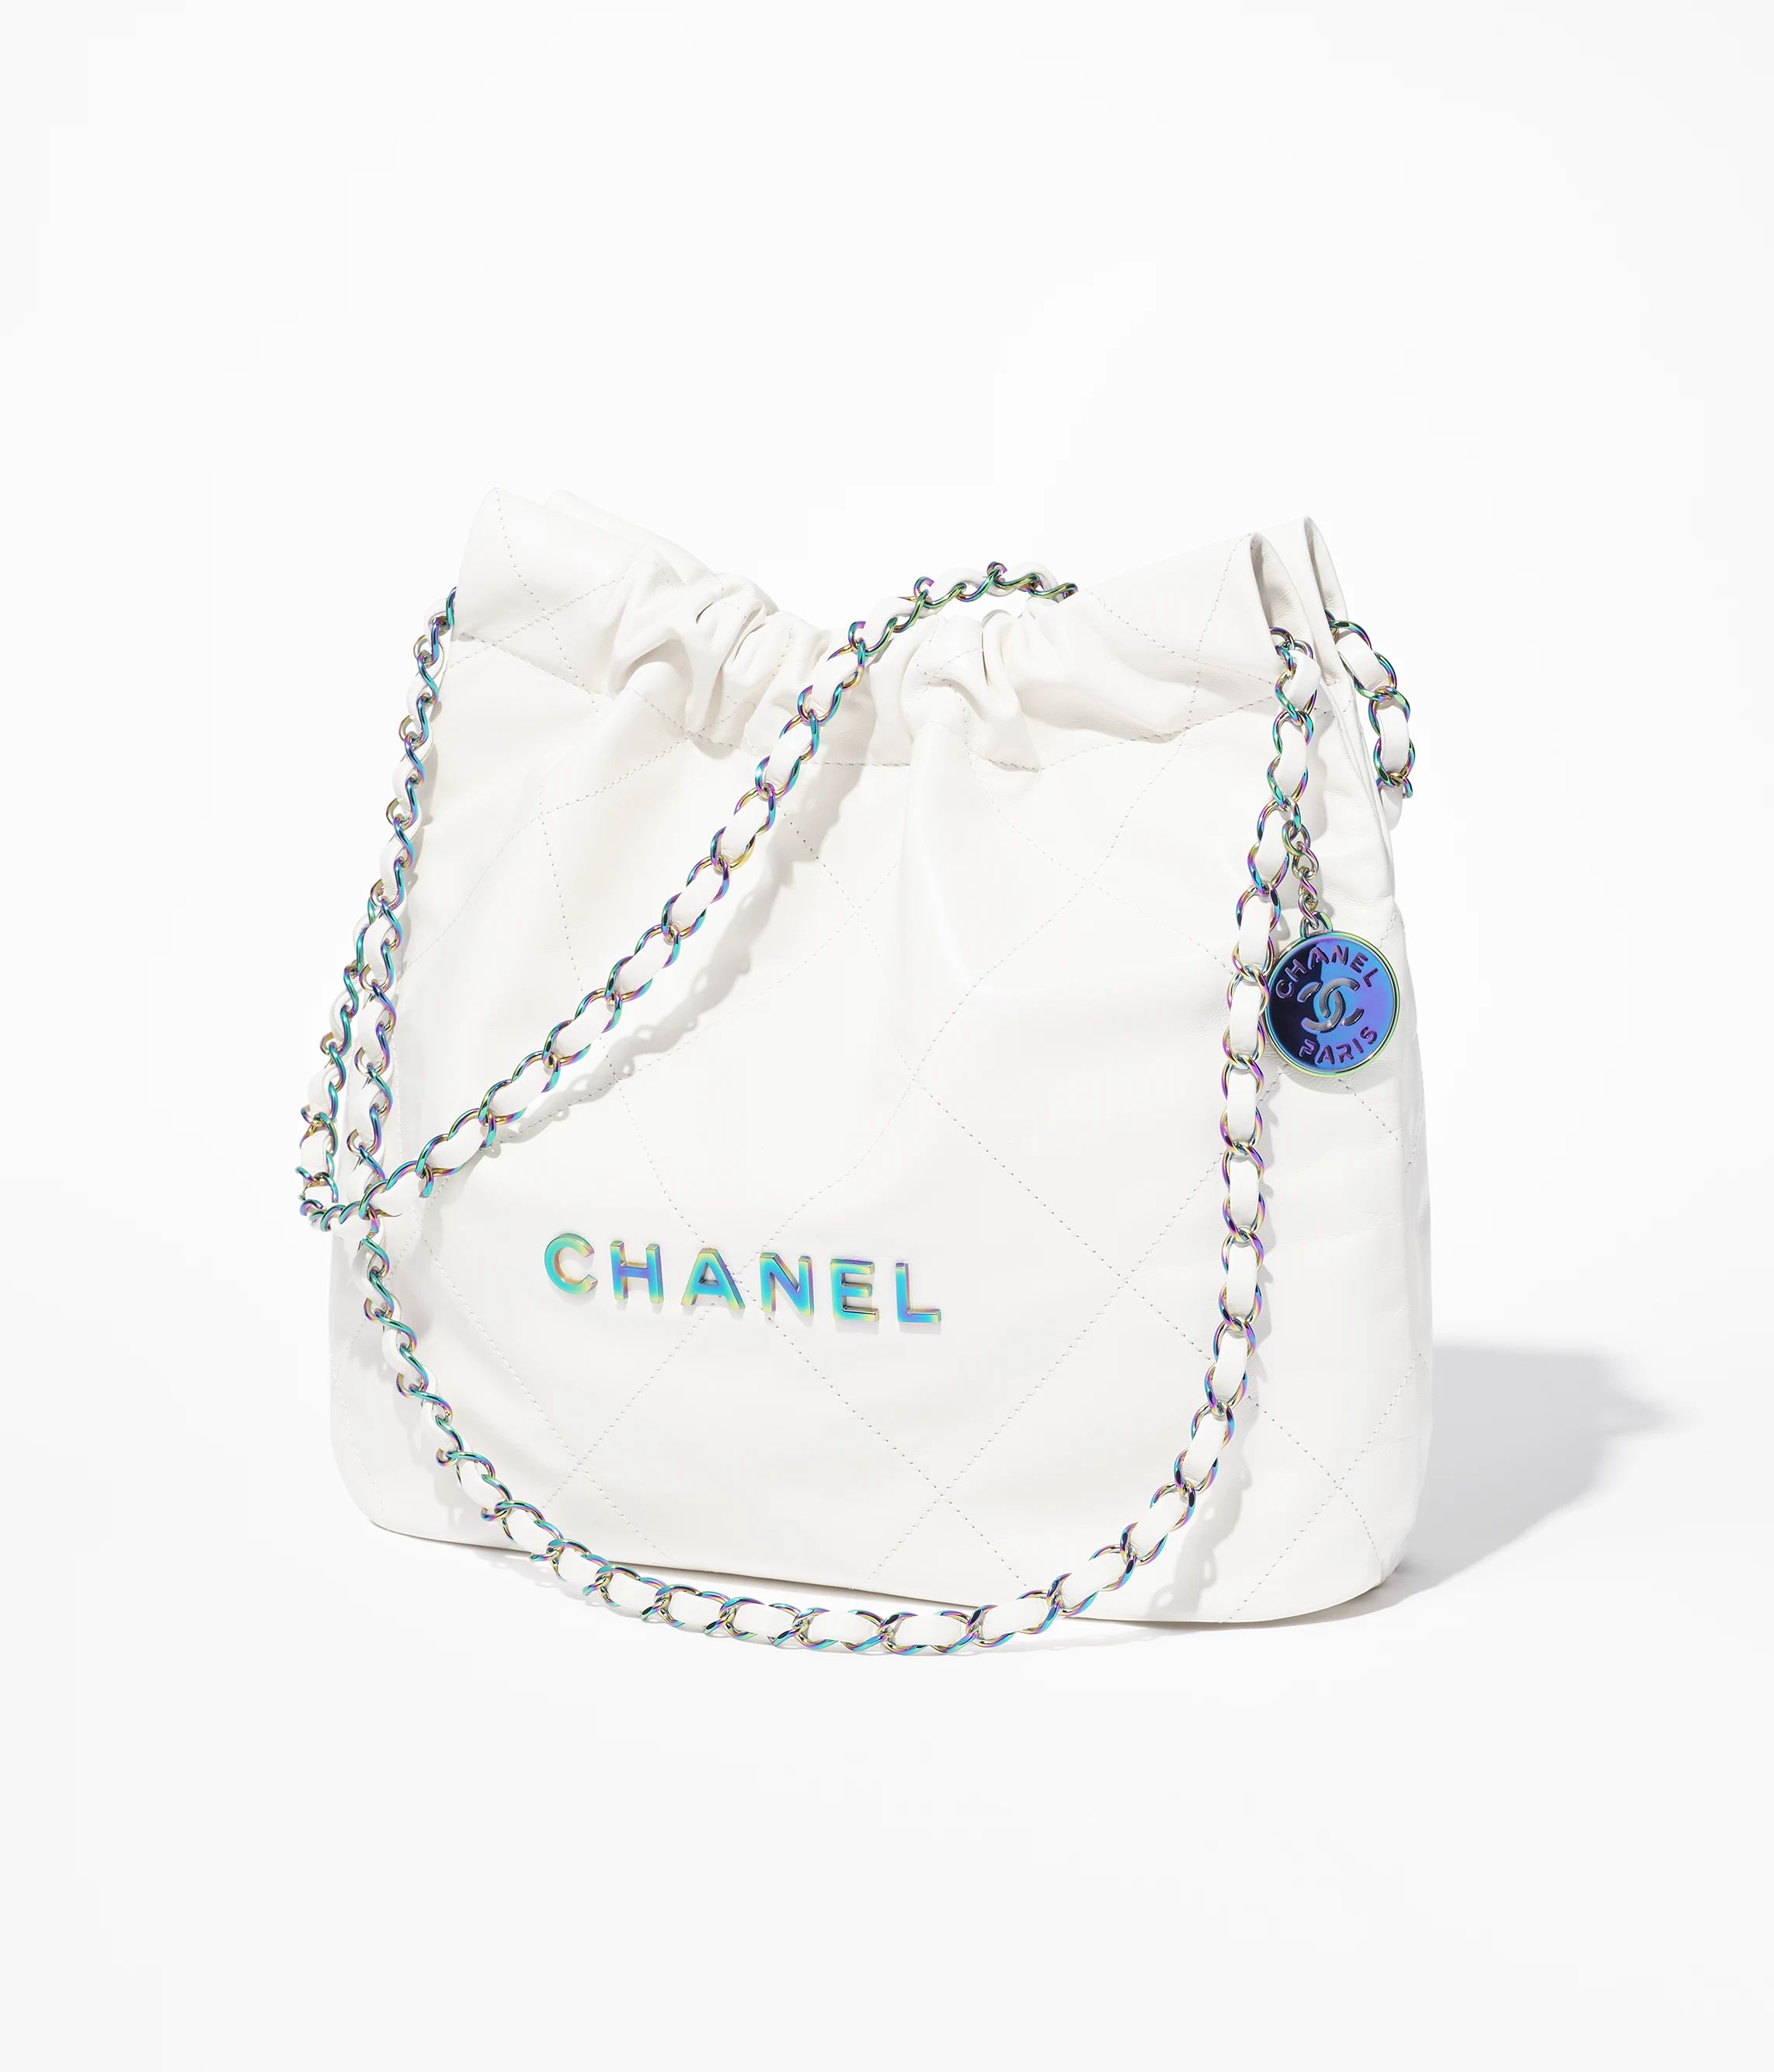 CHANEL 22 Small Handbag | Chanel, Inc. (US)